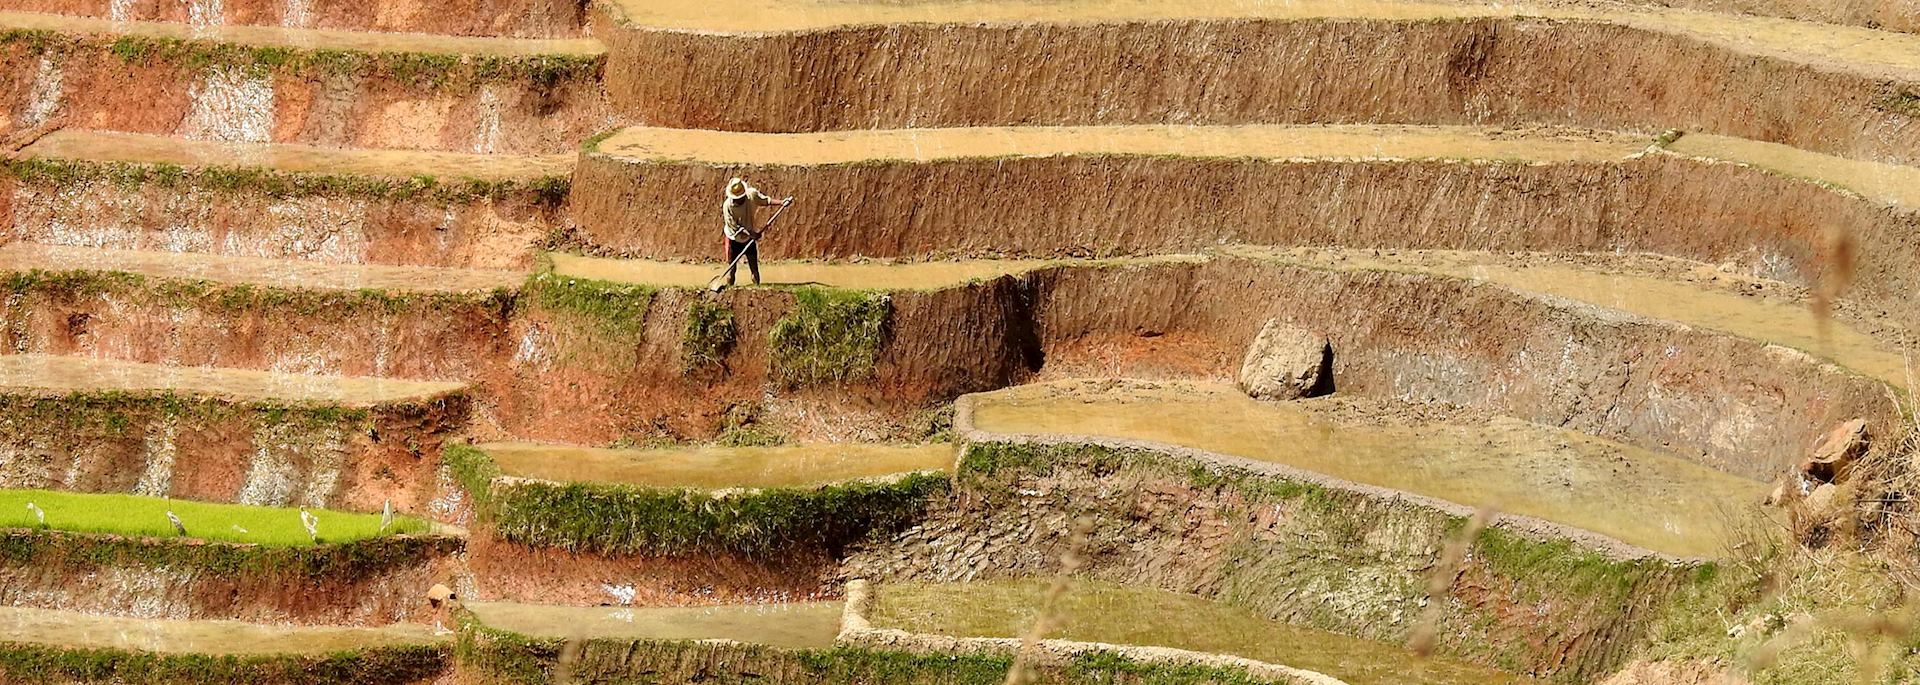 Rice farmer, Ranomafana National Park, Madagascar